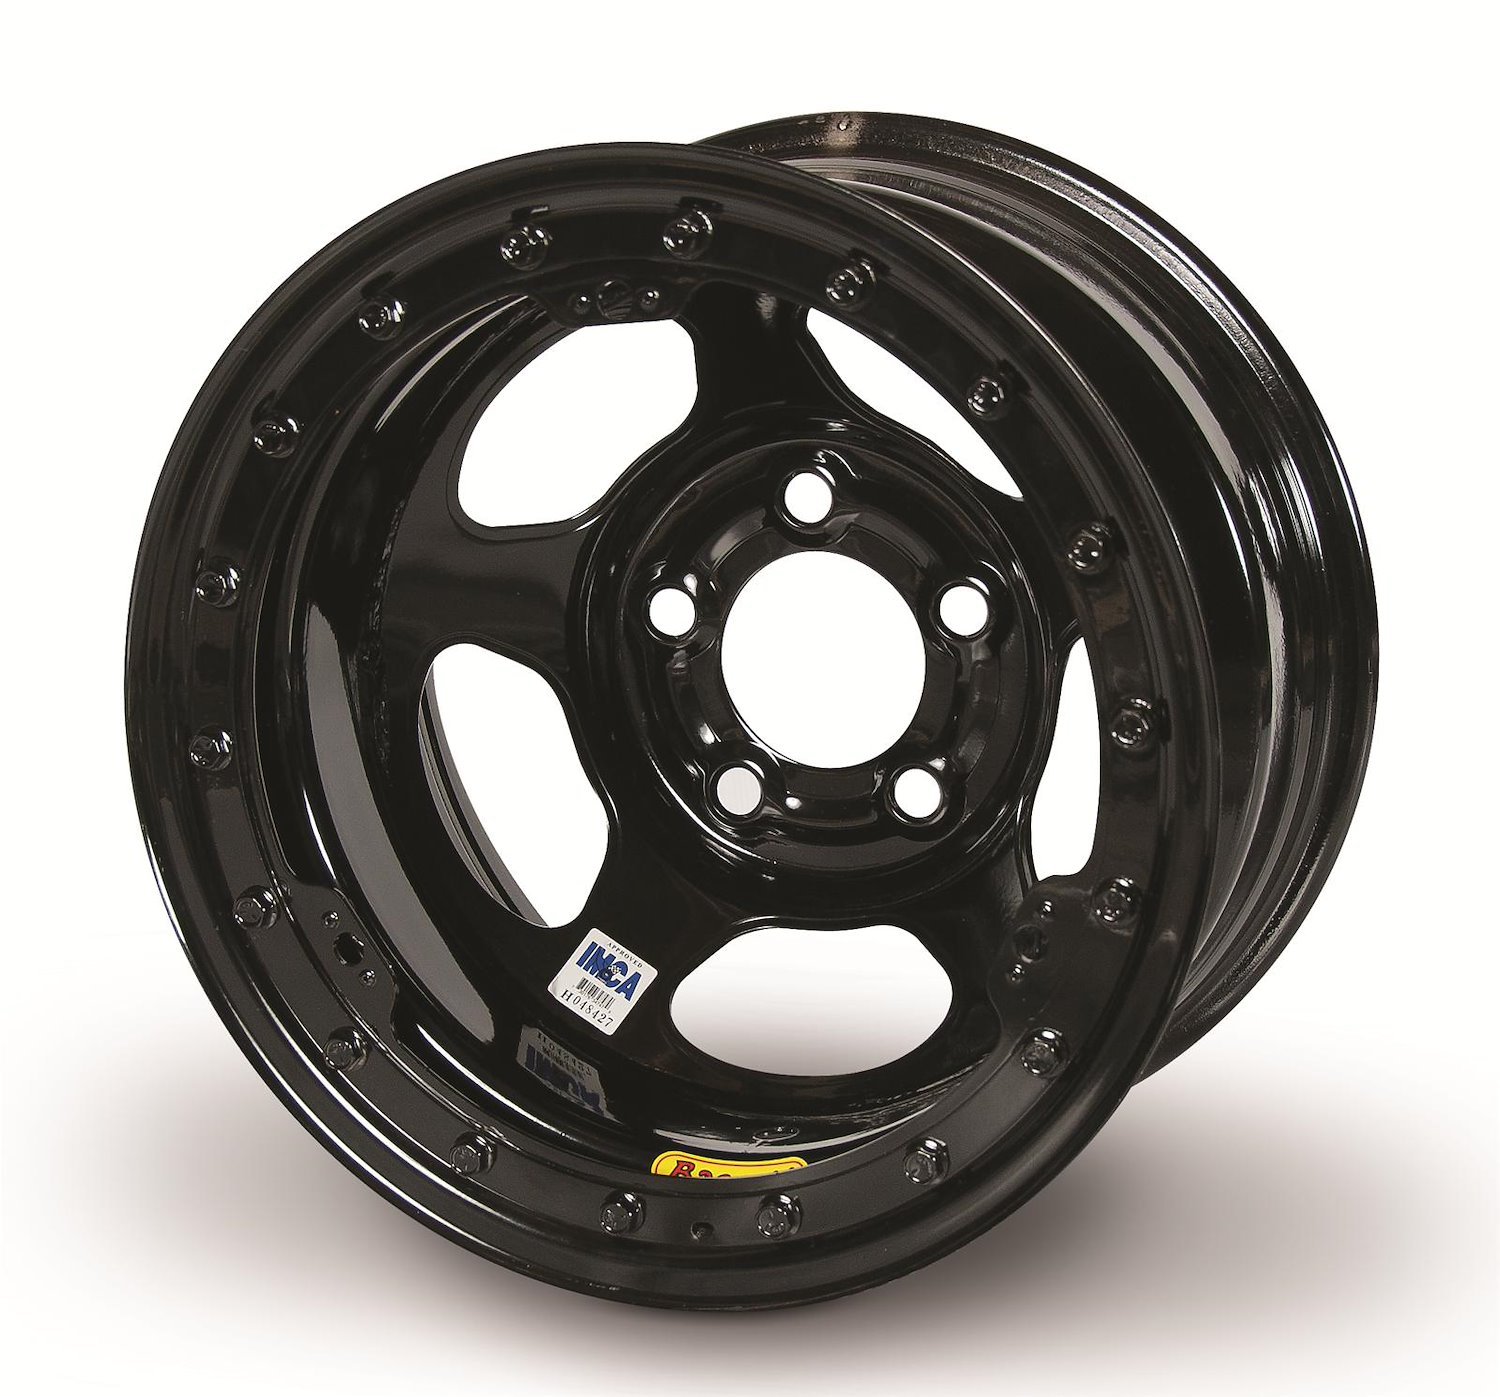 38ST2L Inertia Advantage Beadlock Wheel Size: 13" x 8" - Gloss Black